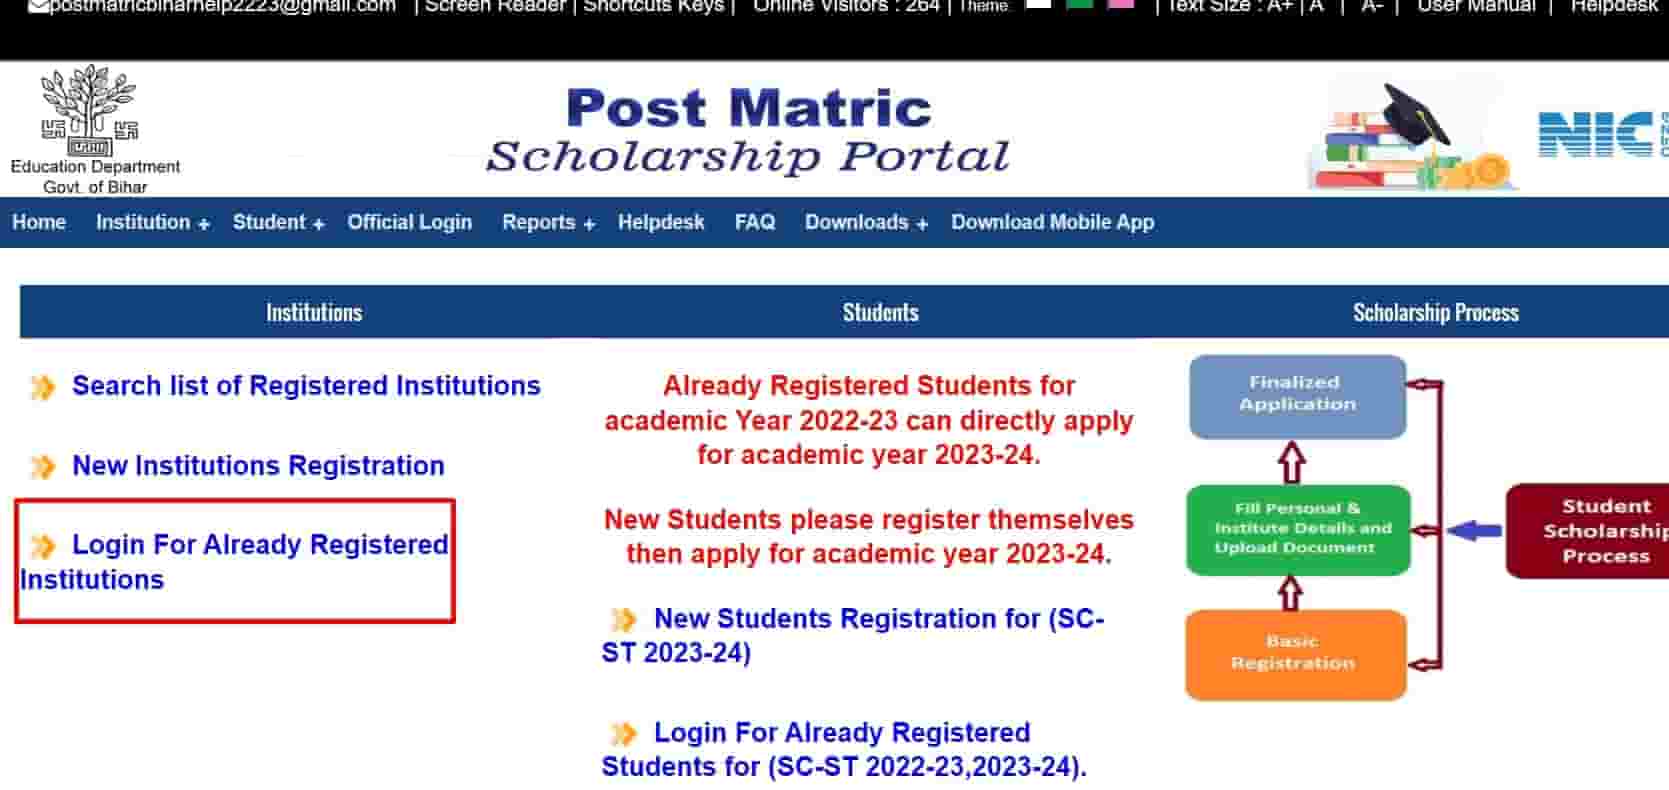 Login Already Registered Student